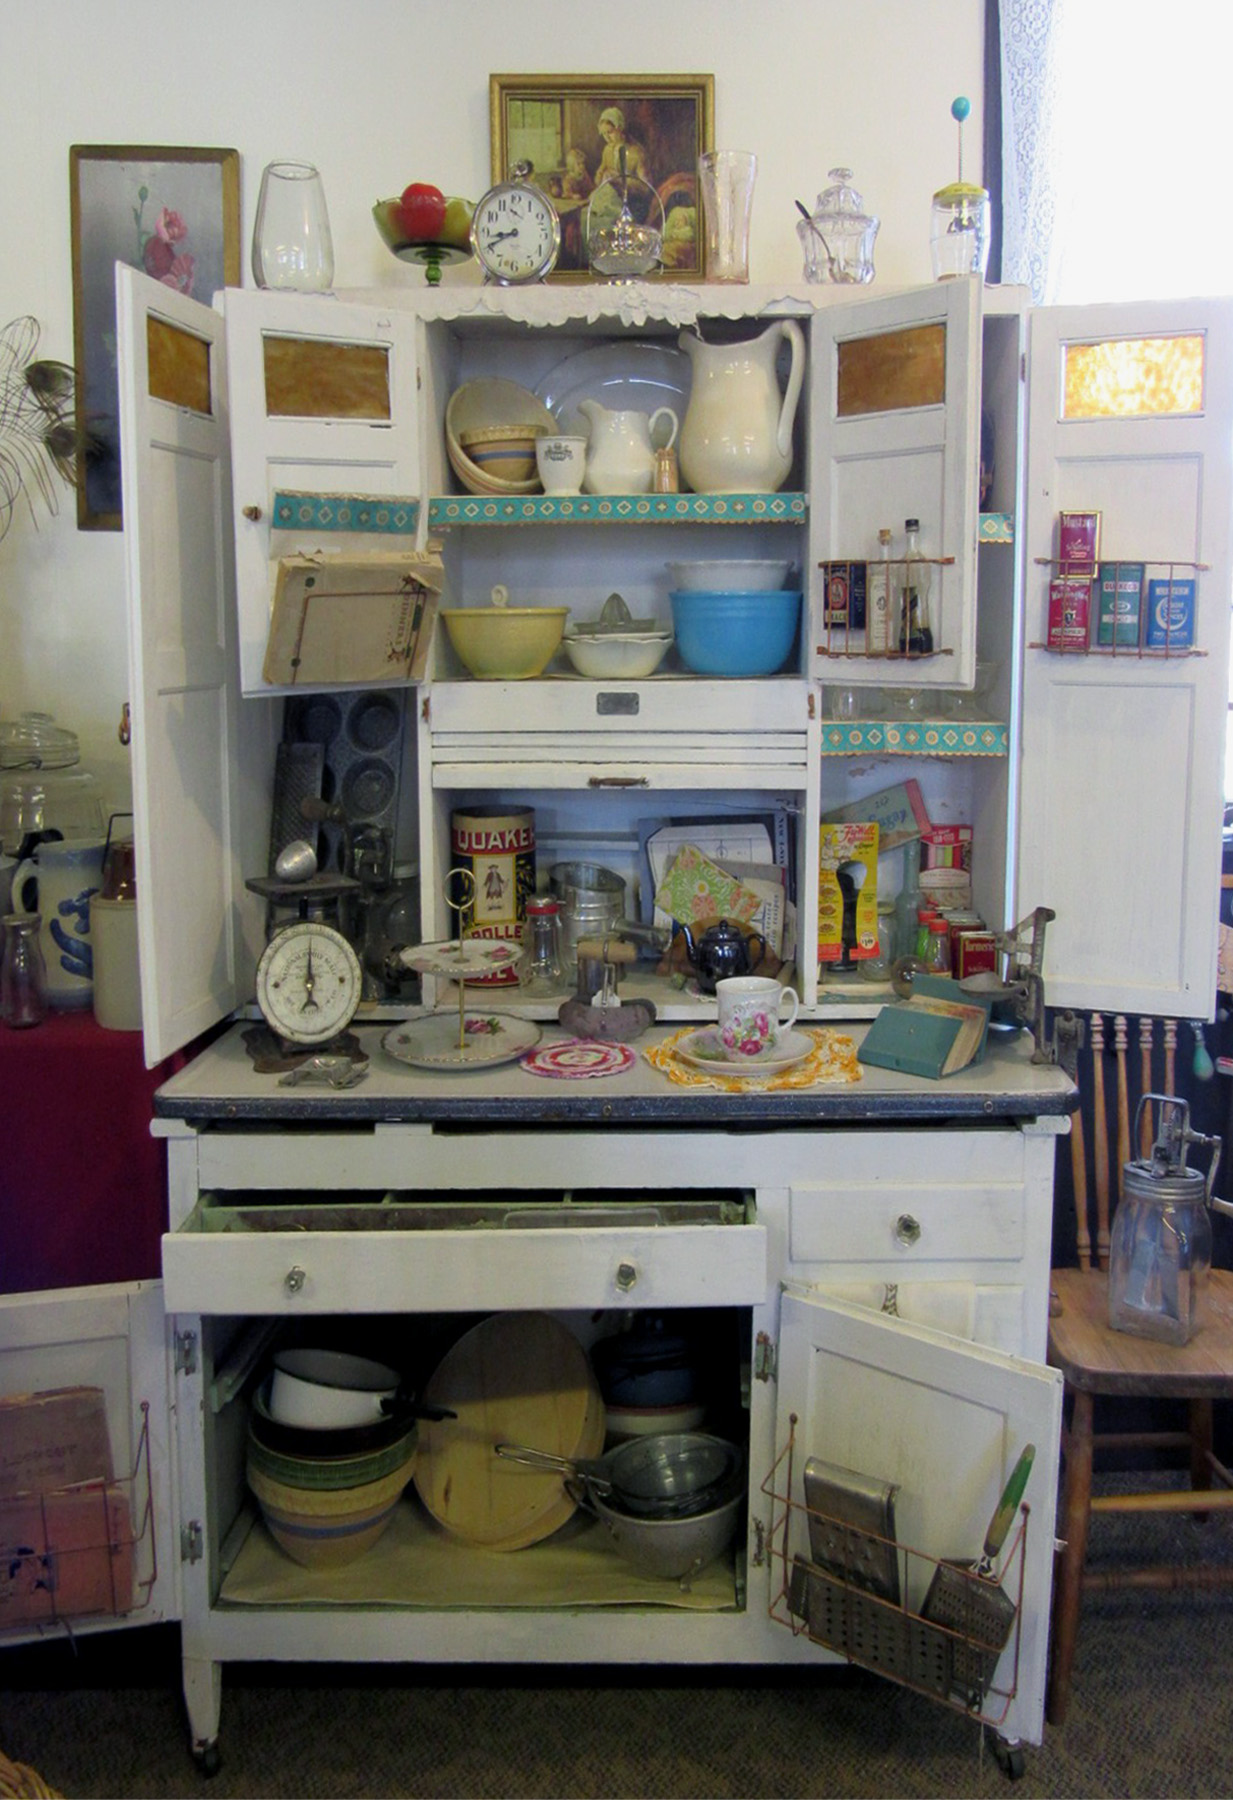 Hoosier Cabinet Newport Washington Household Appliances And